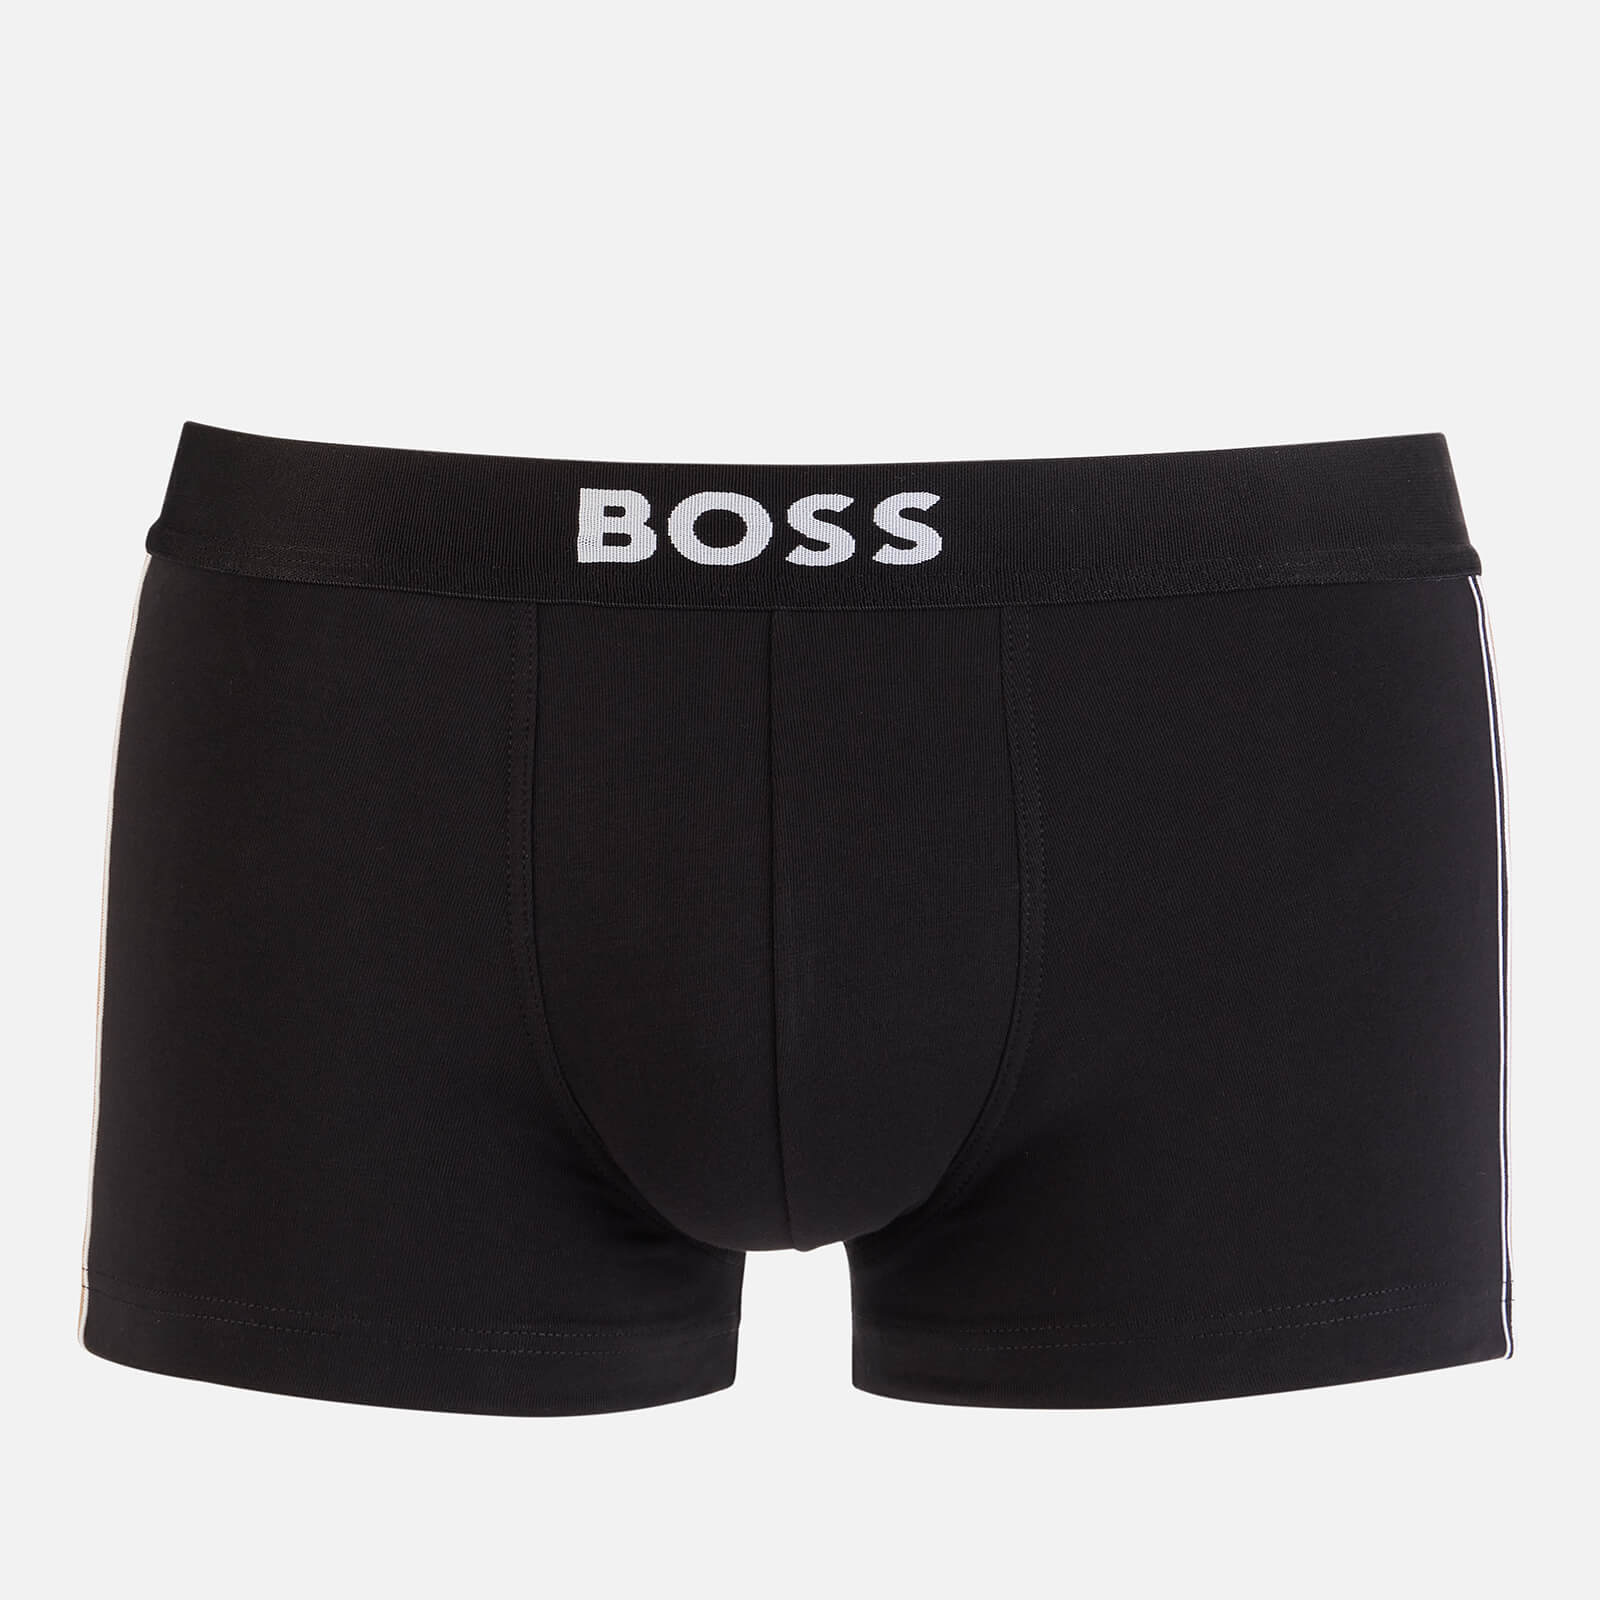 BOSS Bodywear Men's Essential Trunks - Black - S